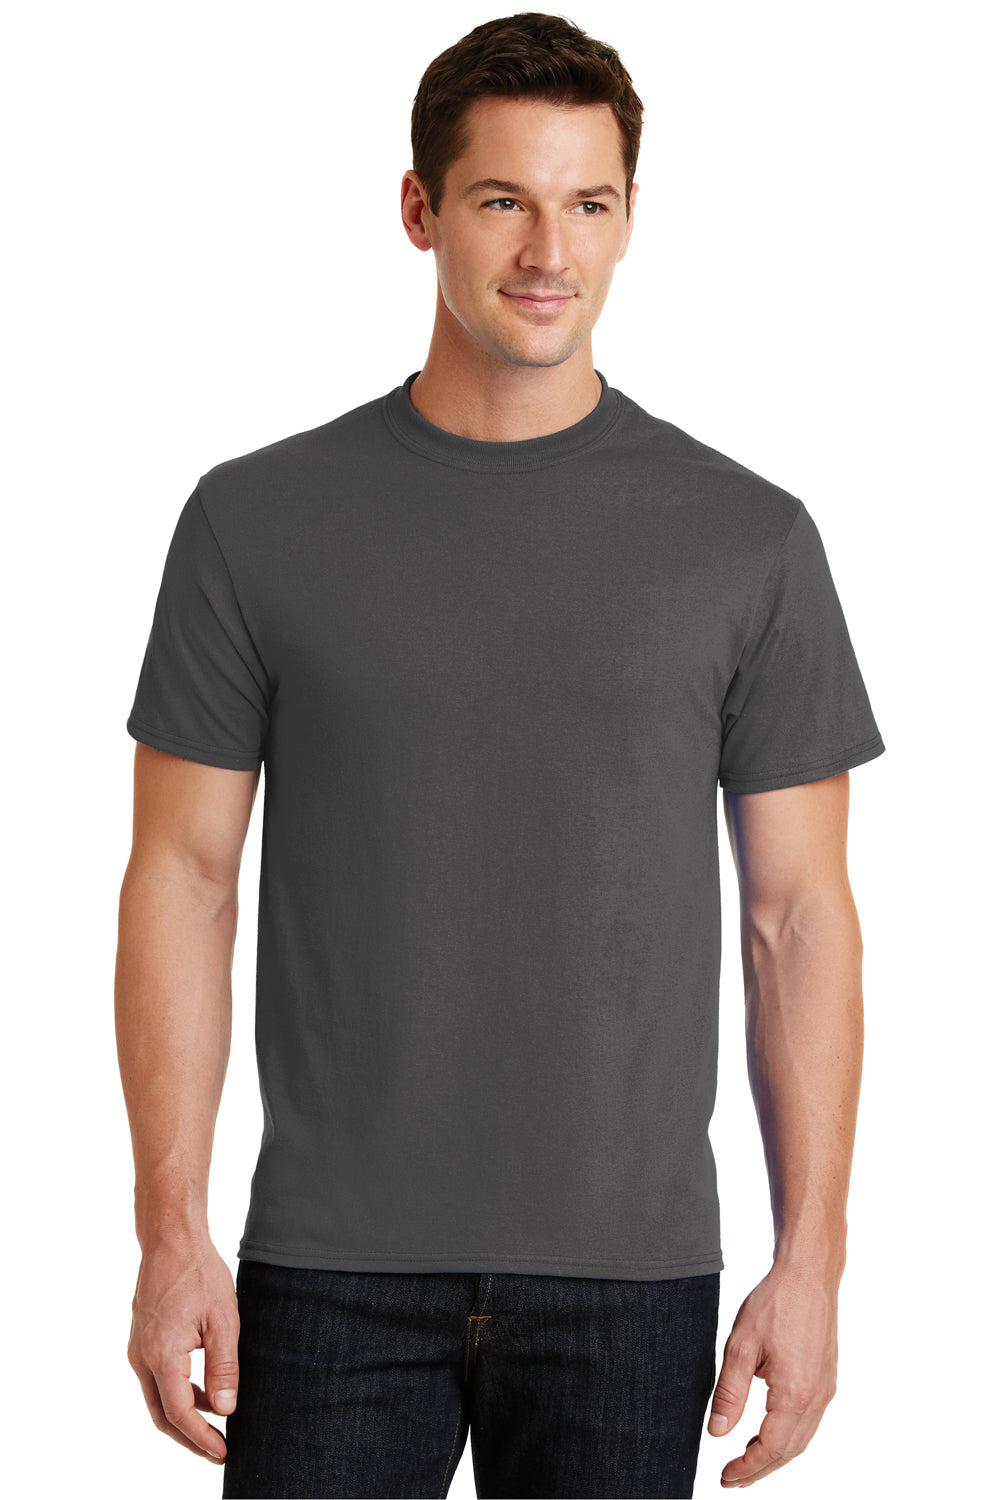 Port & Company PC55 Mens Core Short Sleeve Crewneck T-Shirt Charcoal Grey Front